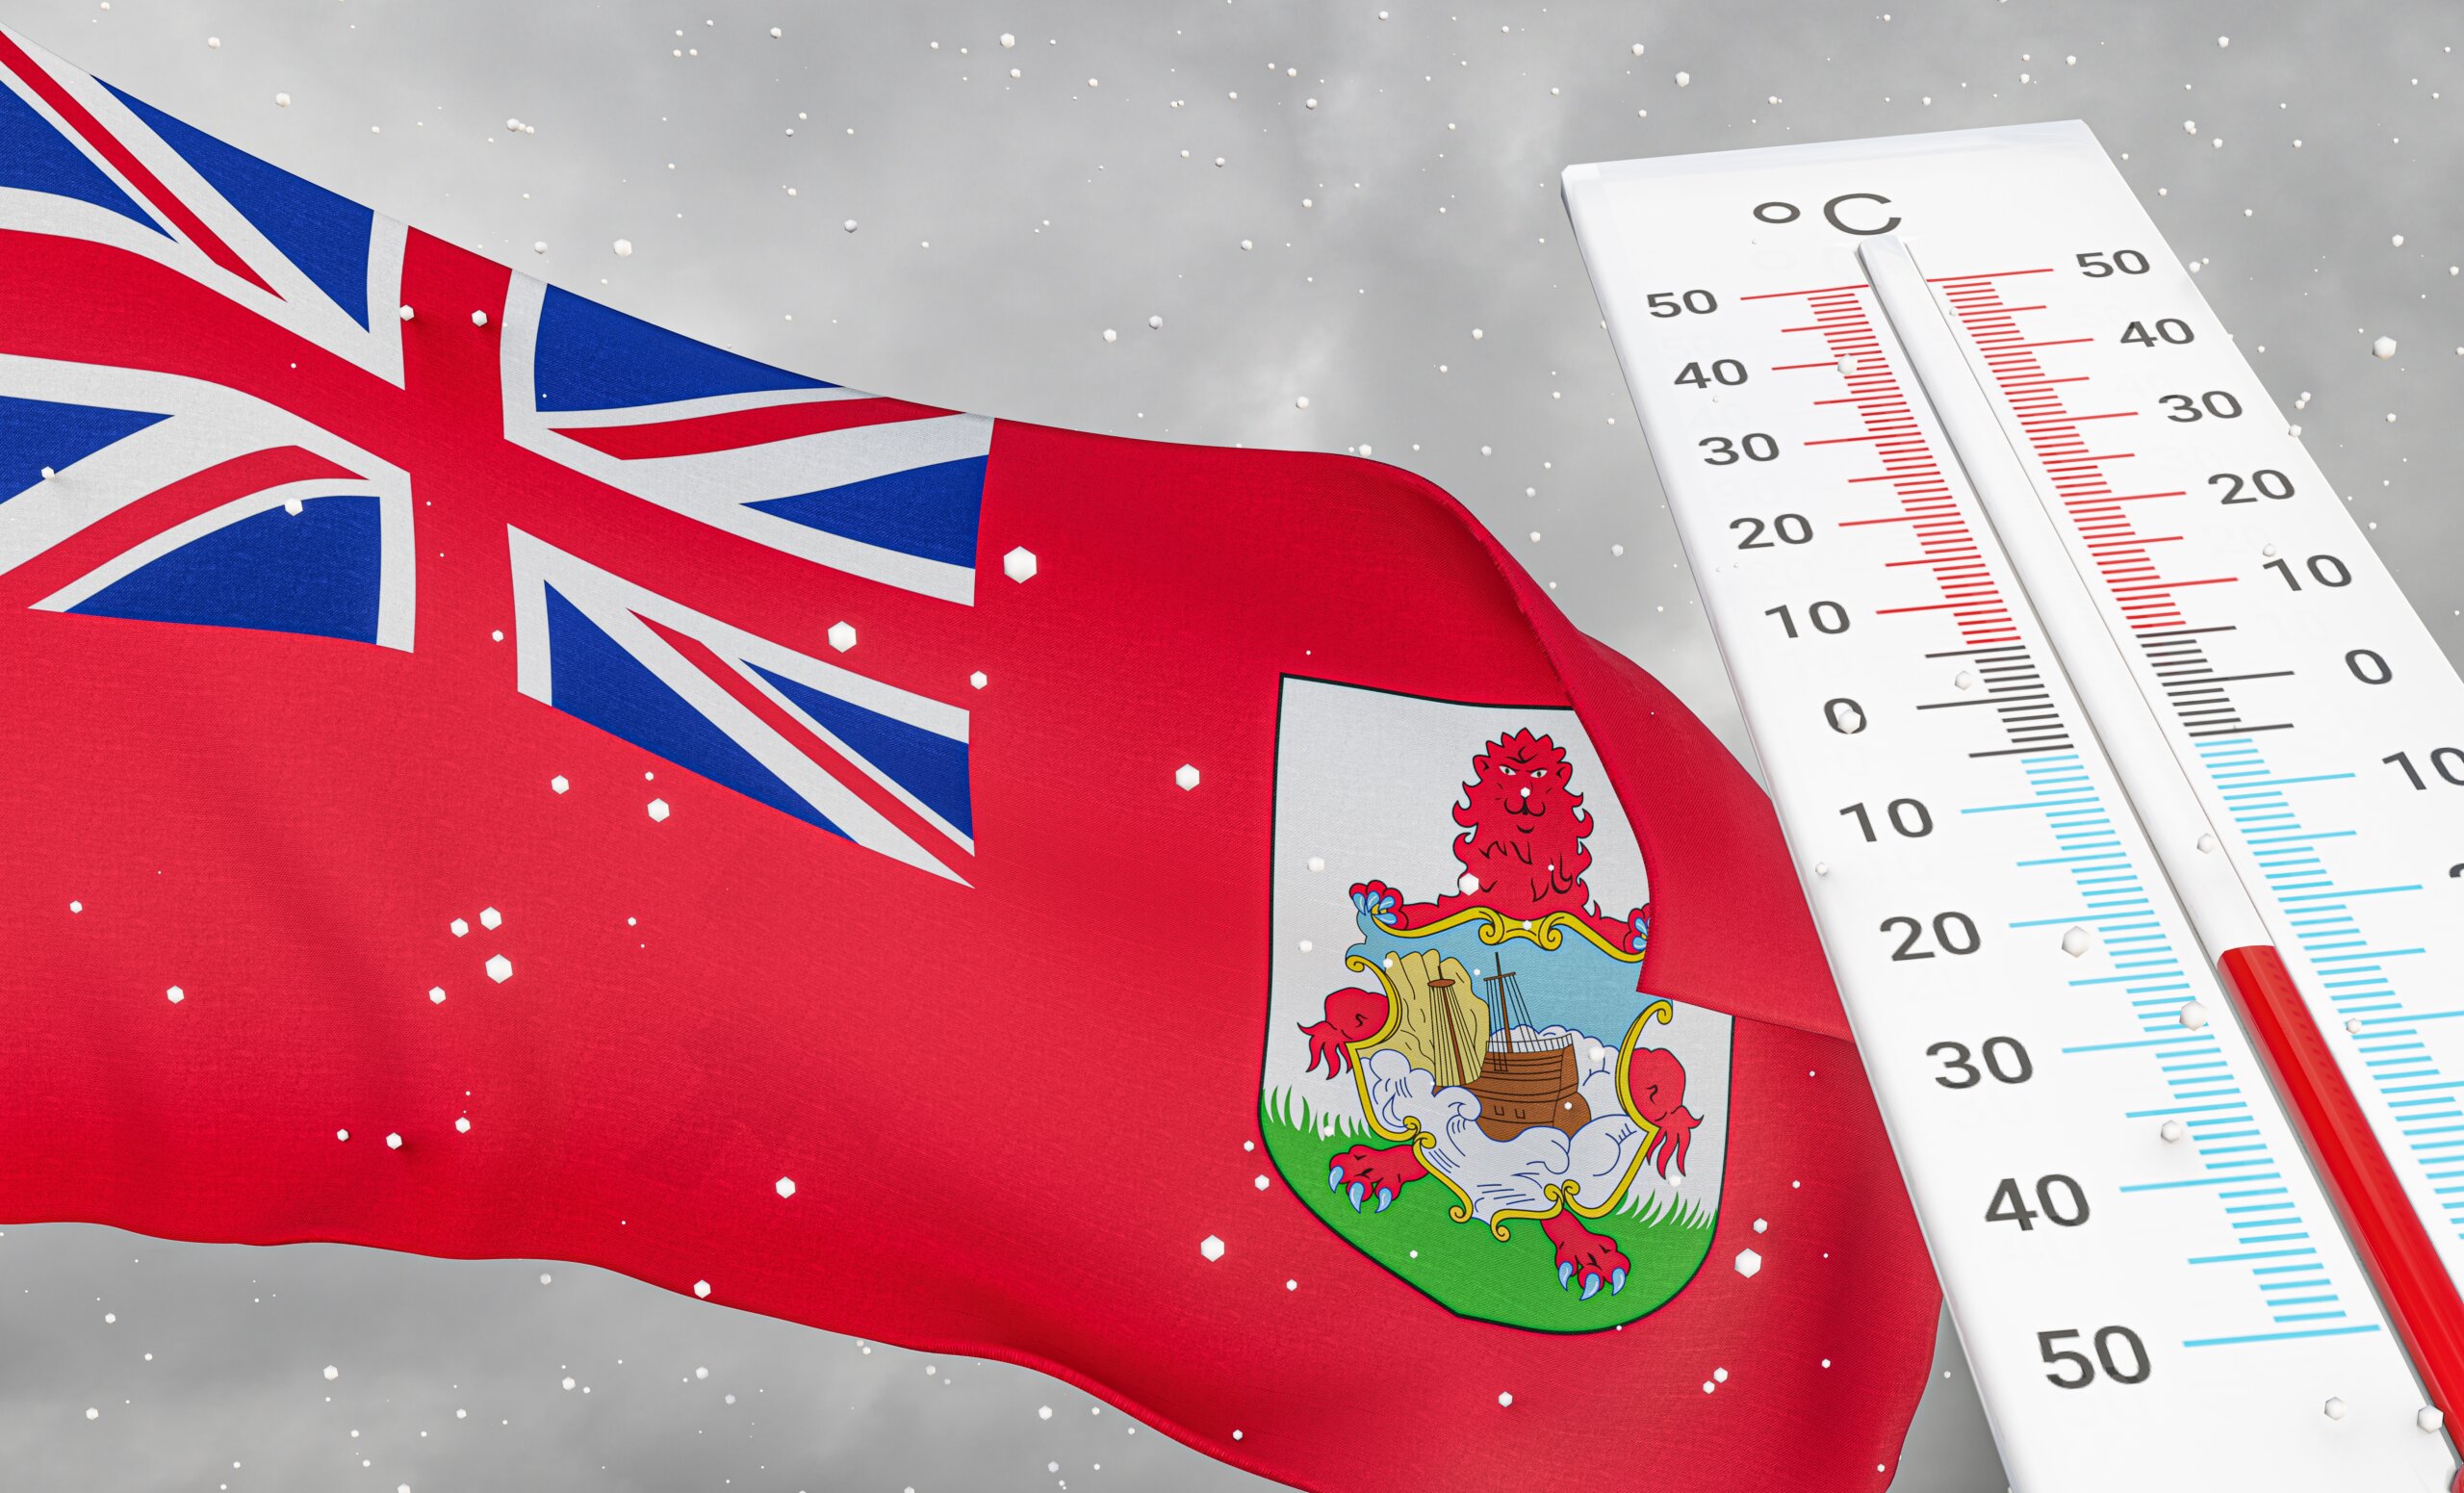 Winter in Bermuda with severe cold, negative temperature, Cold season in Bermuda, cruelest coldest weather in Bermuda, Flag Bermuda with thermometer. 3D work and 3D image